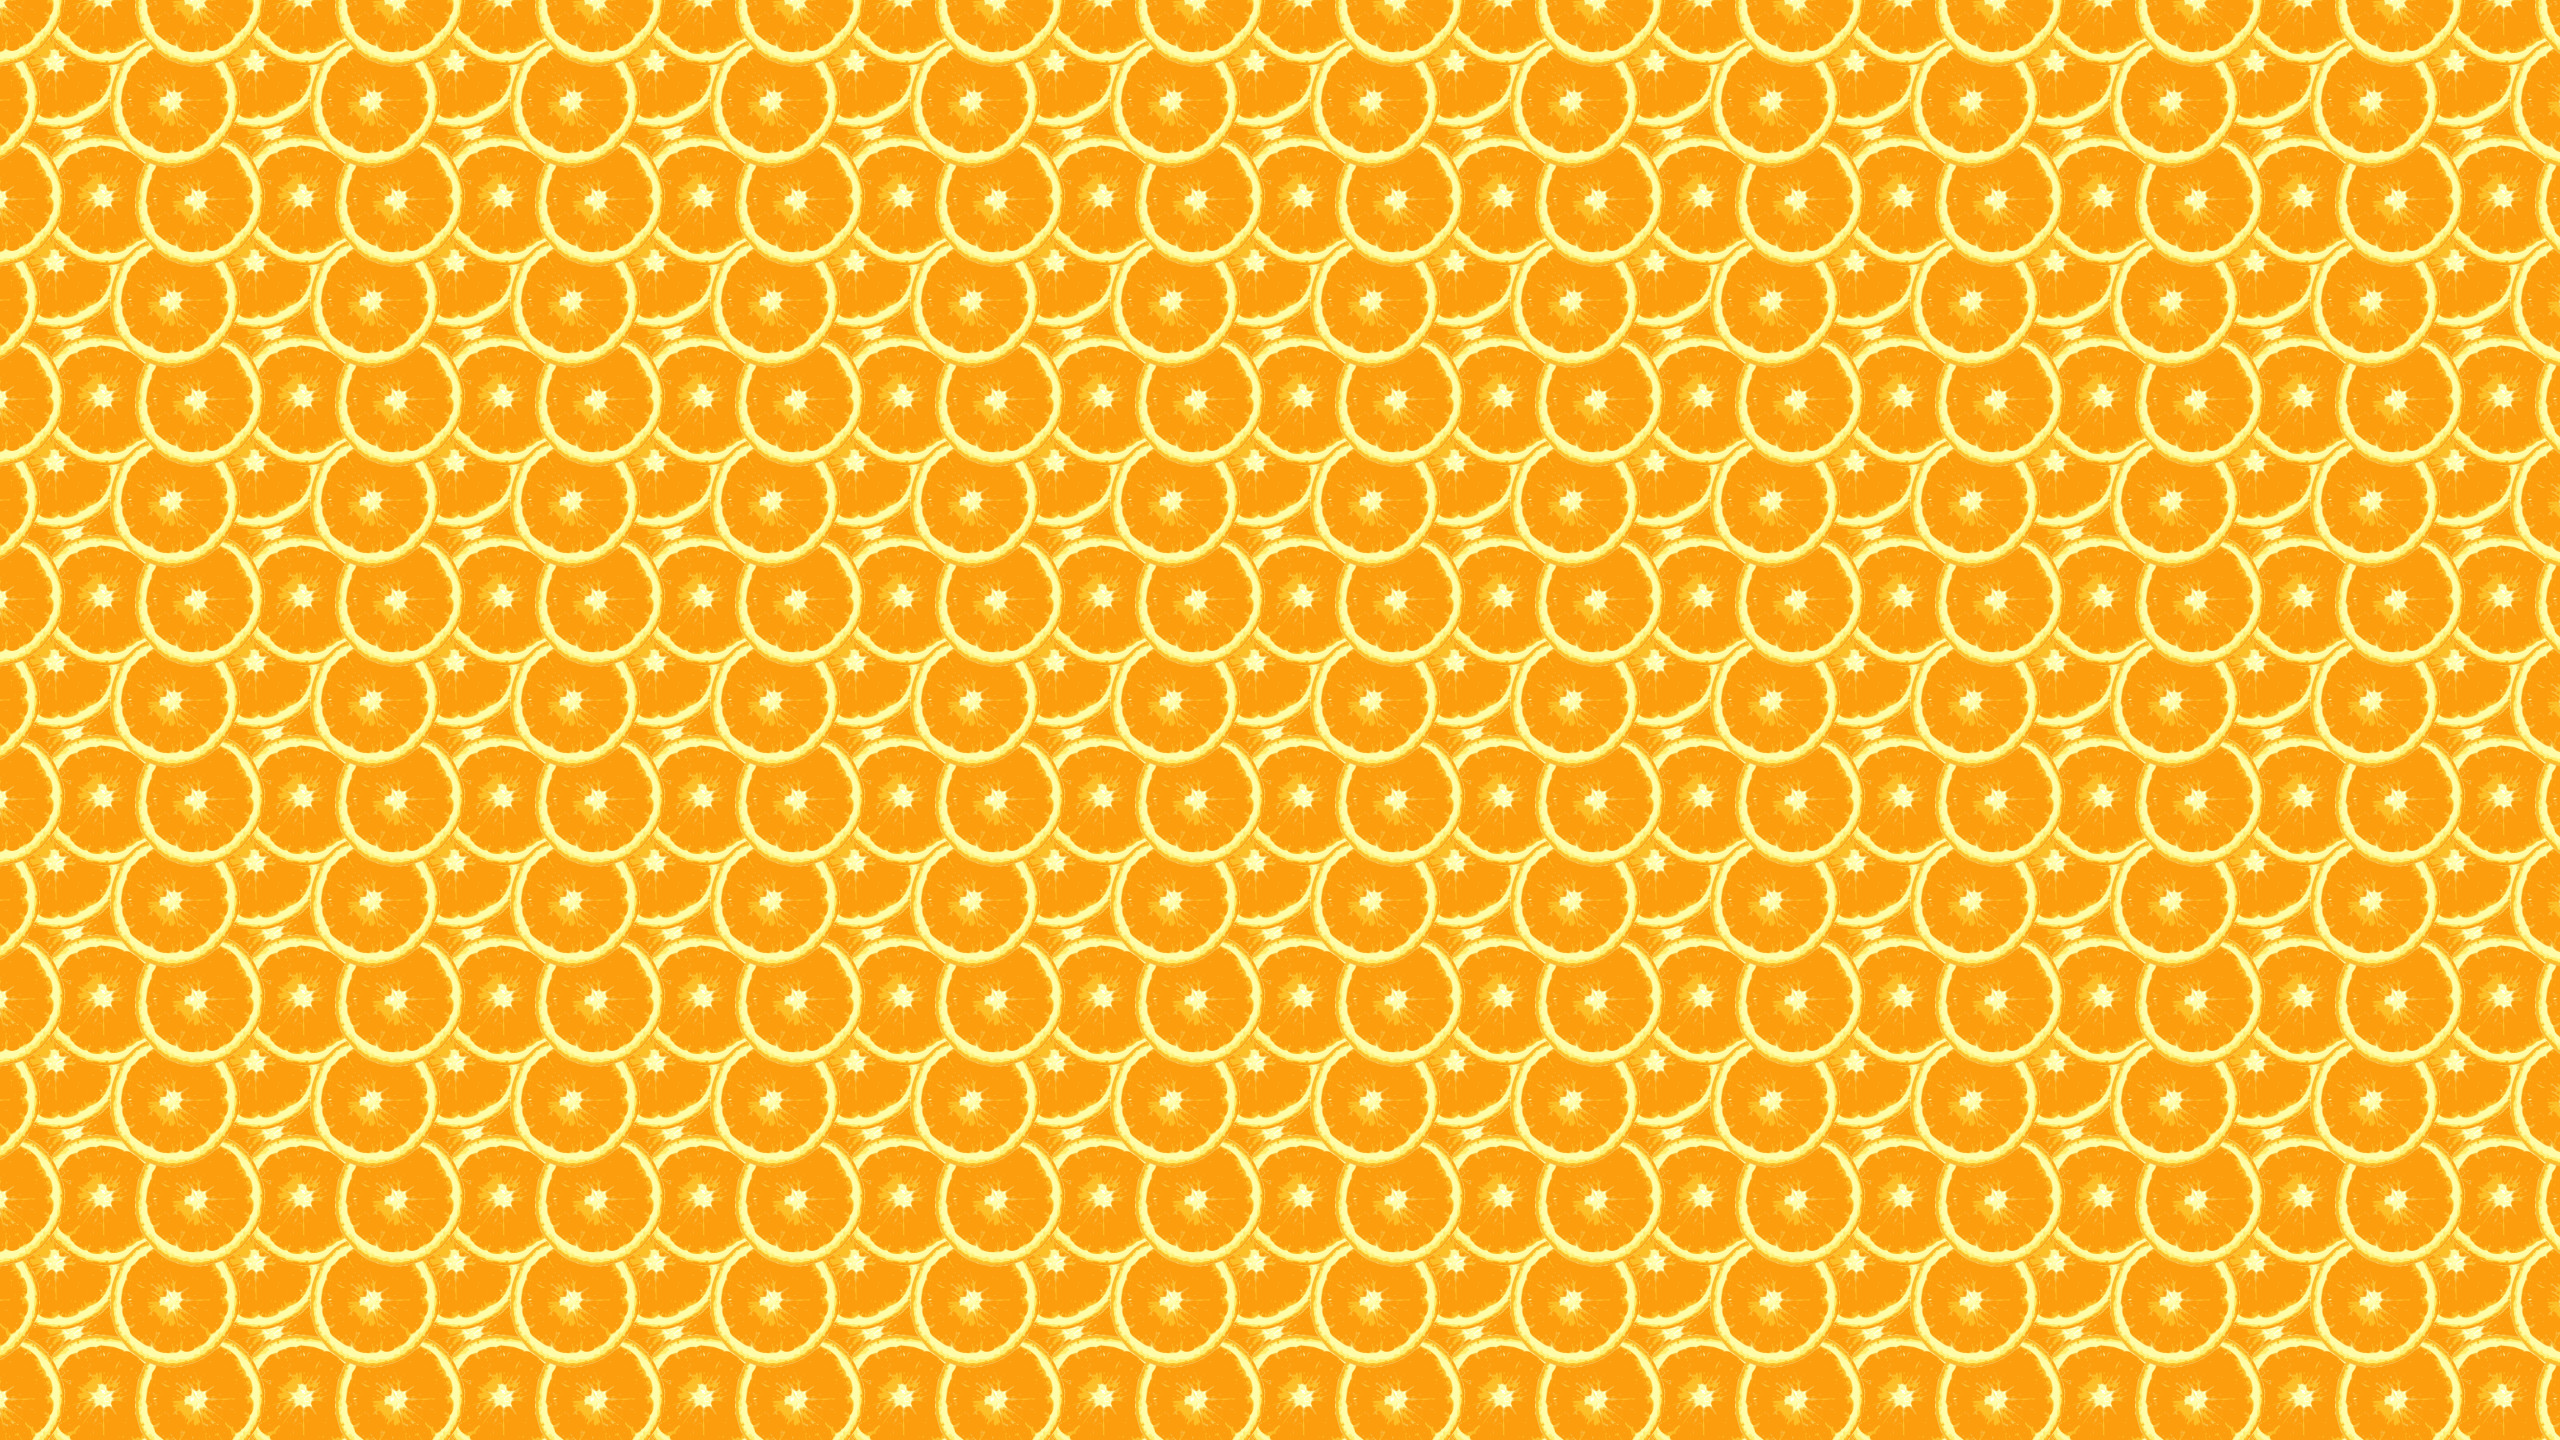 2560x1440 Patterns/Backgrounds/Wallpaper images orange slices wallpaper HD wallpaper  and background photos